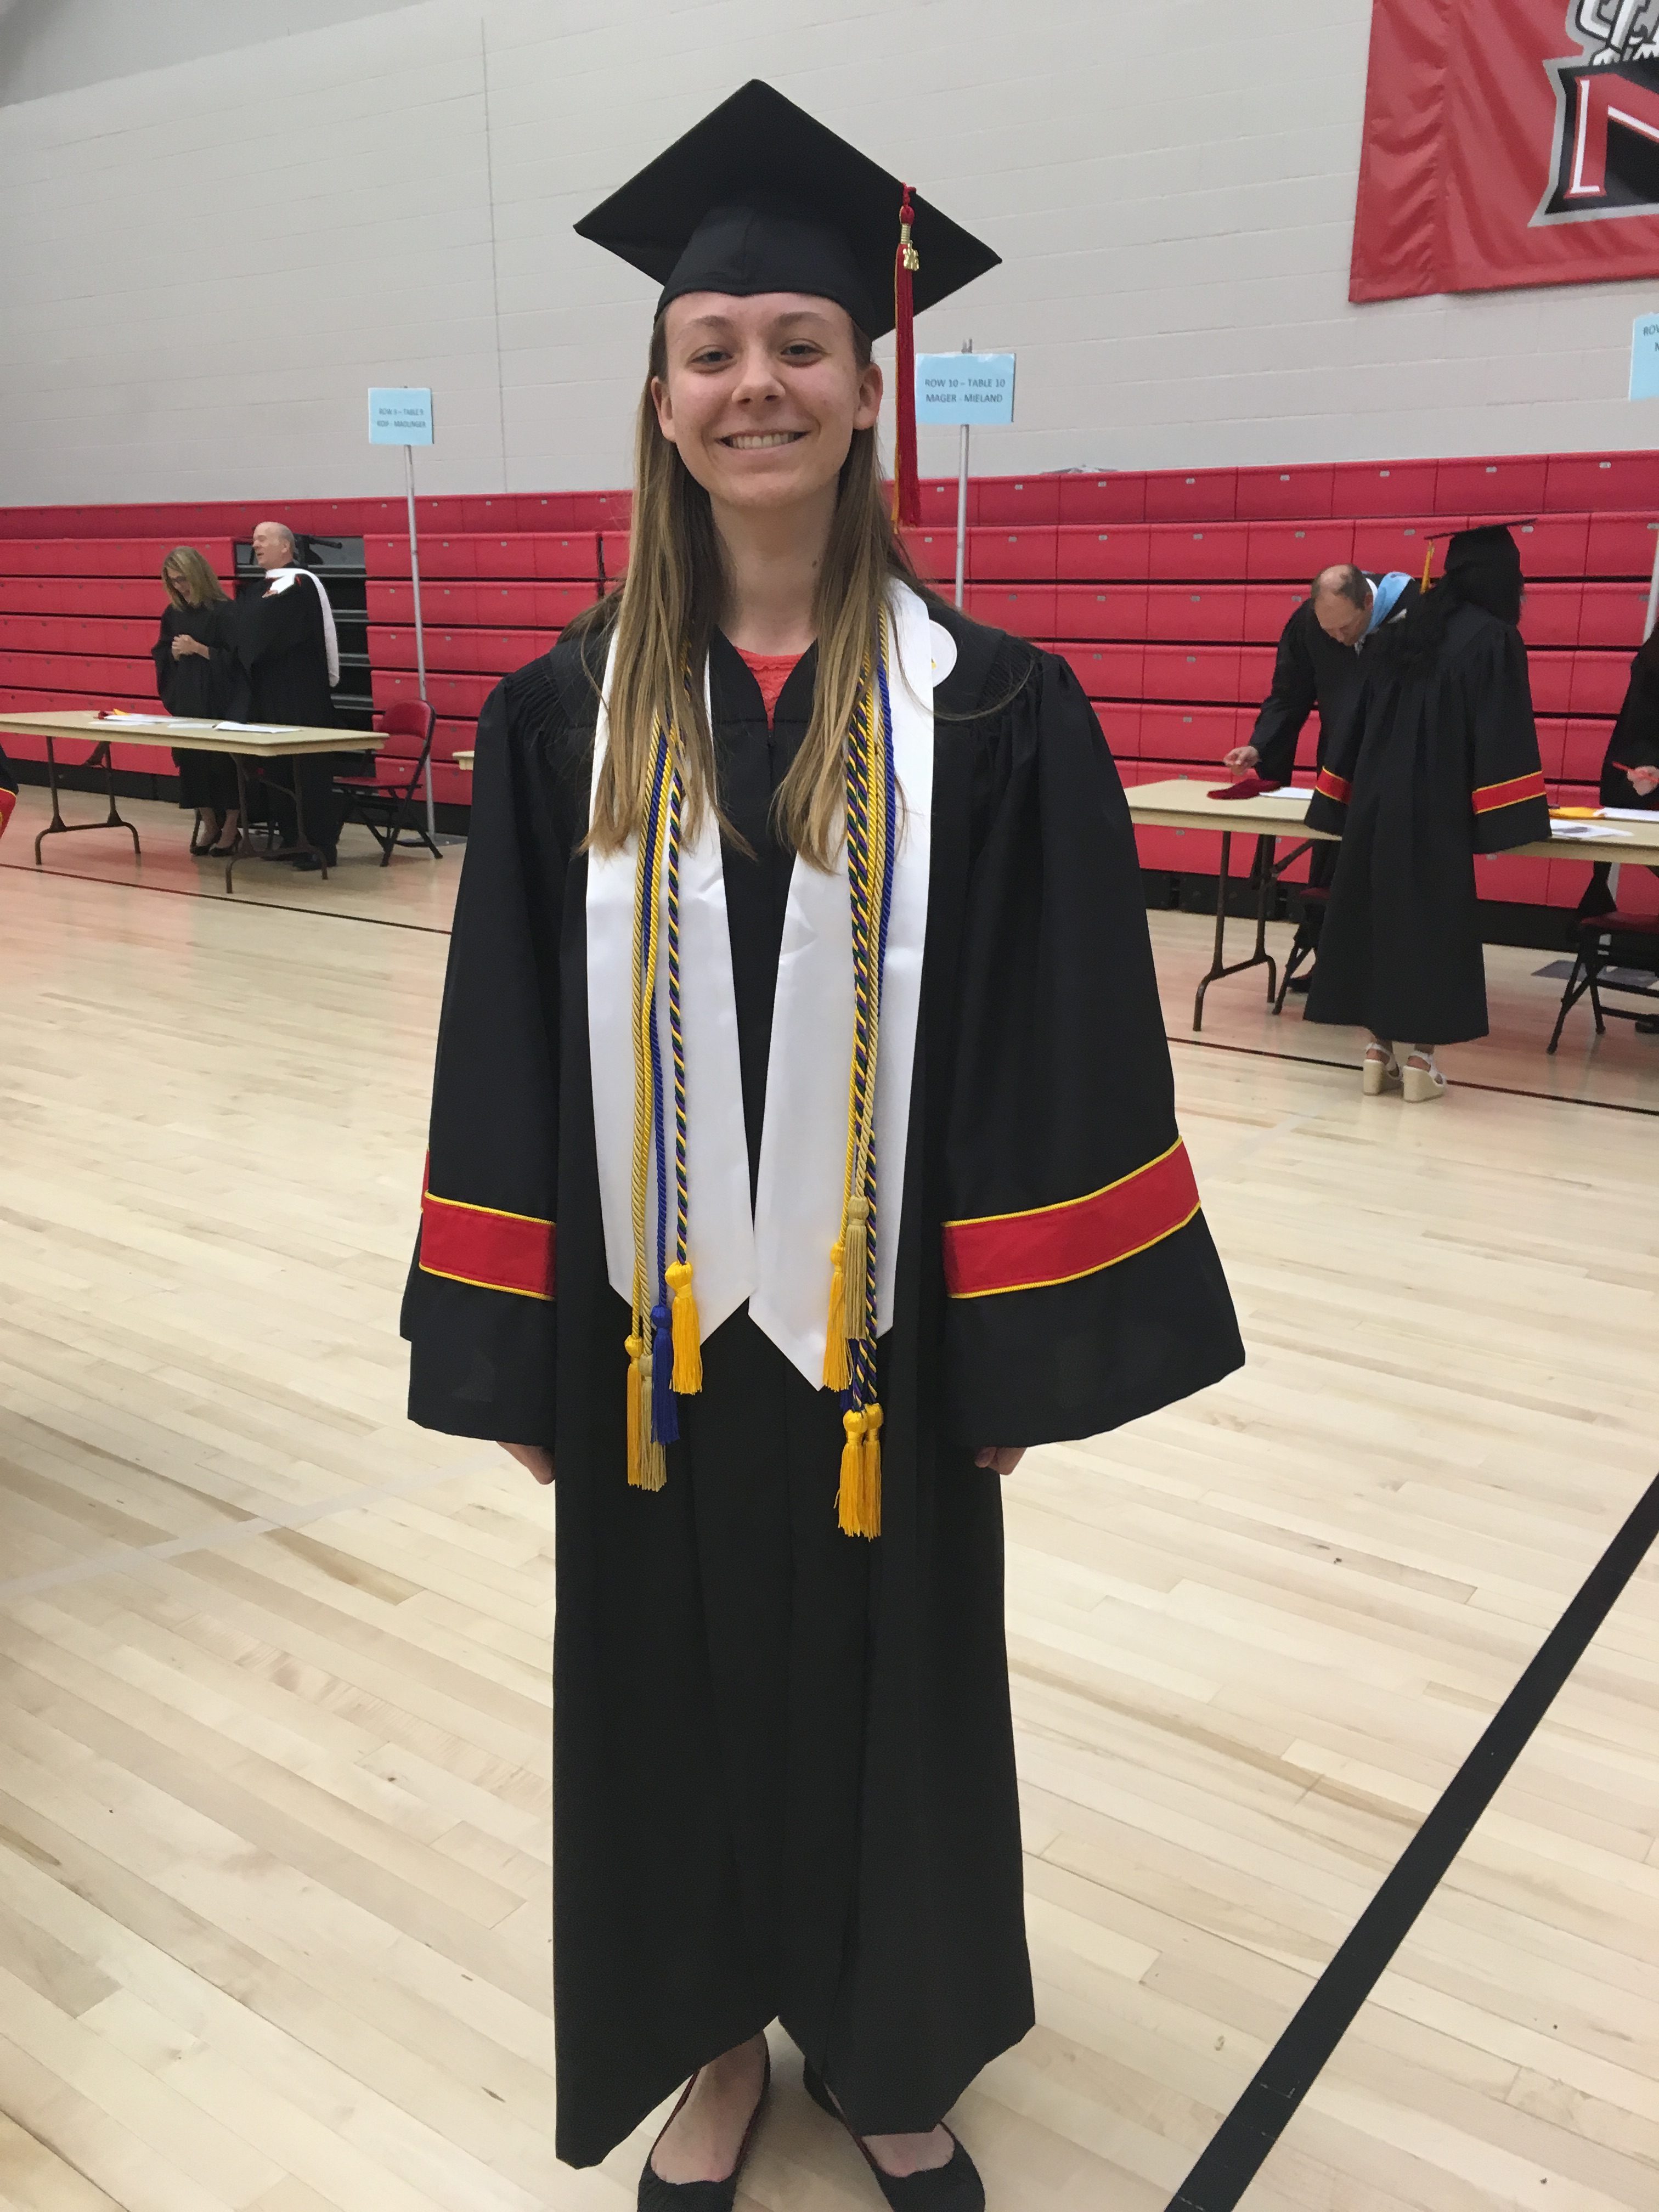 What graduating high school really feels like with Haley Niedzwiedz